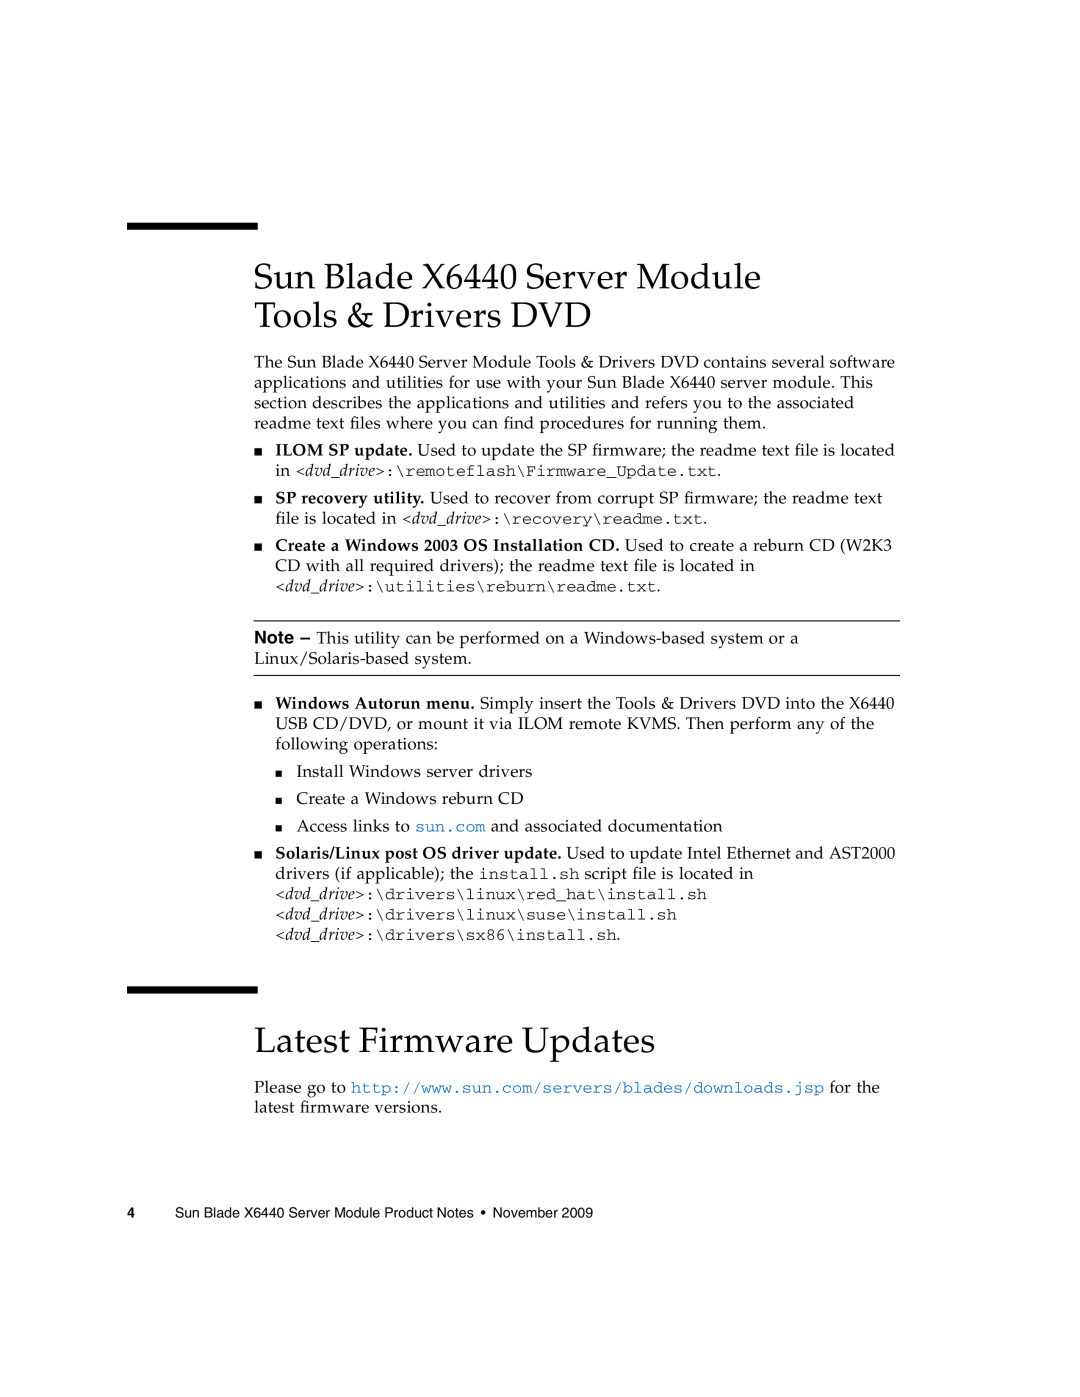 Sun Microsystems manual Sun Blade X6440 Server Module Tools & Drivers DVD, Latest Firmware Updates 